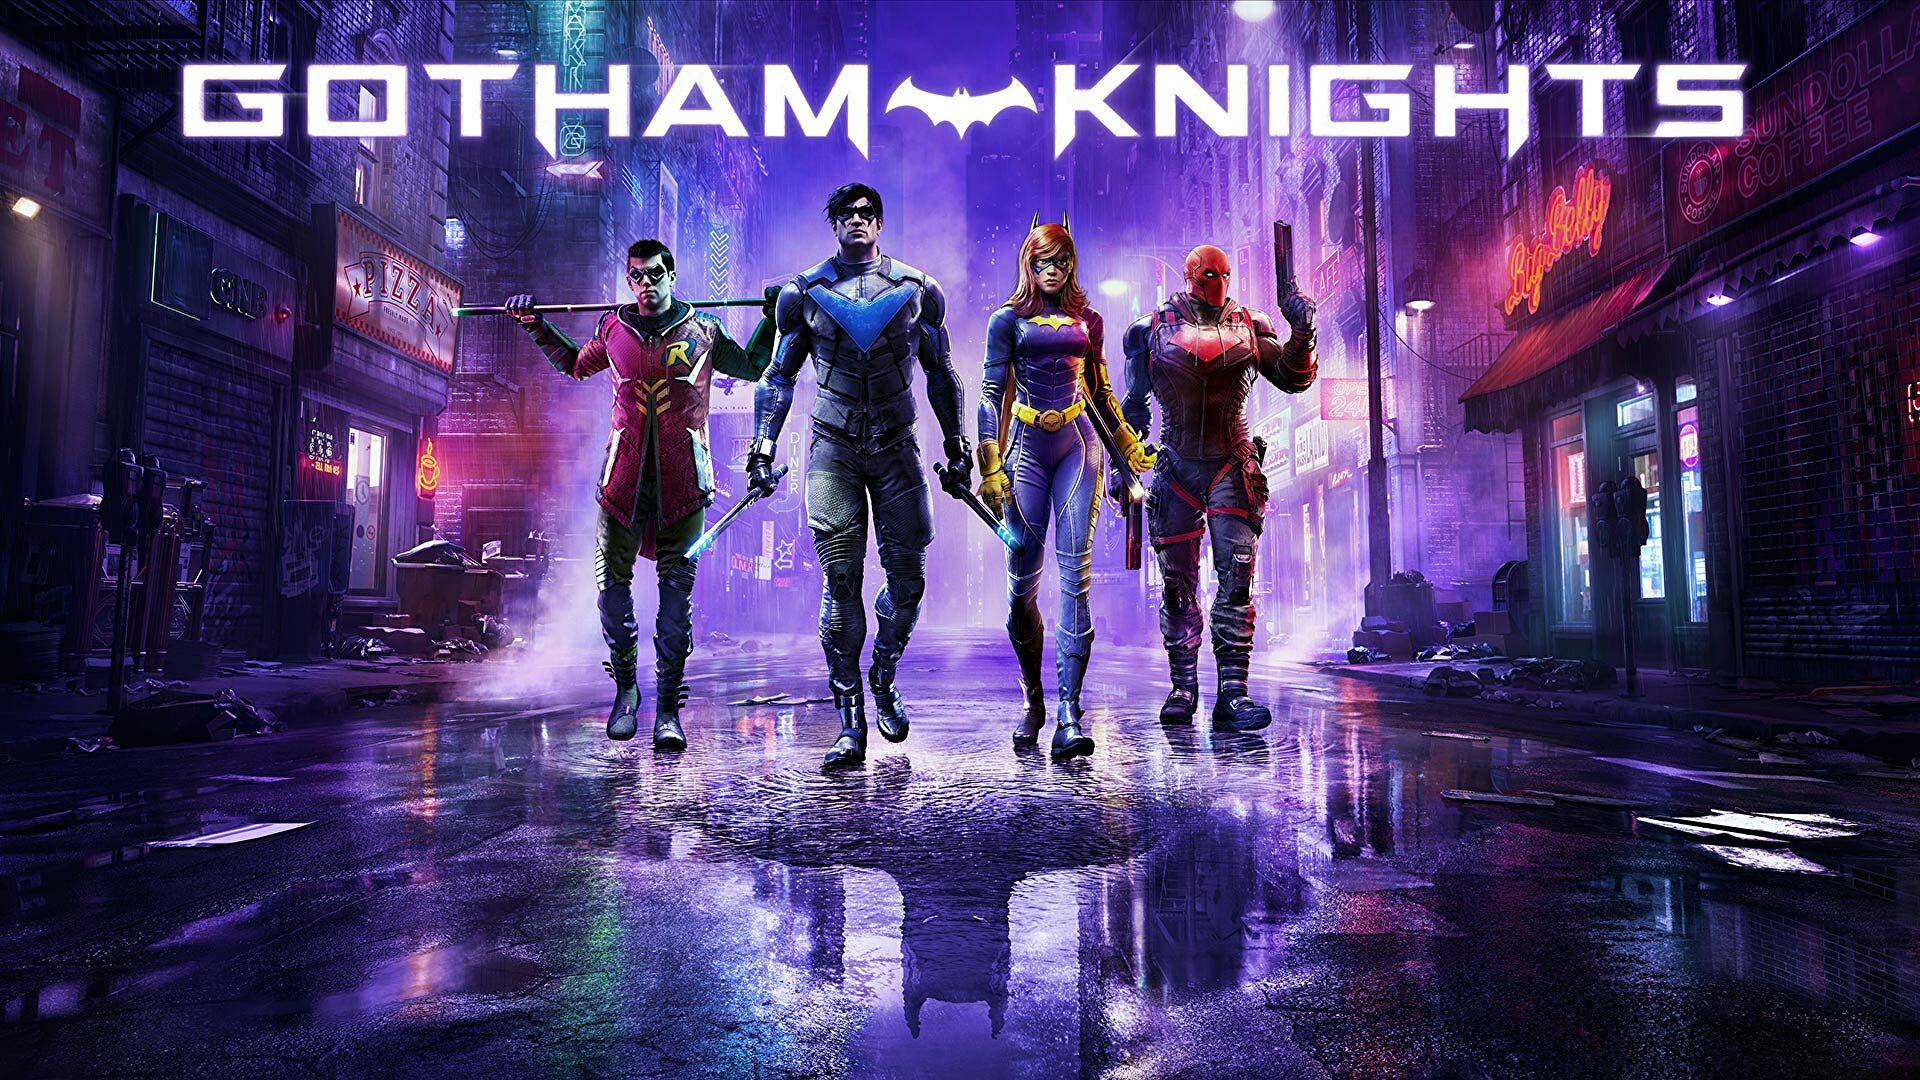 Video: Gotham Knights gameplay